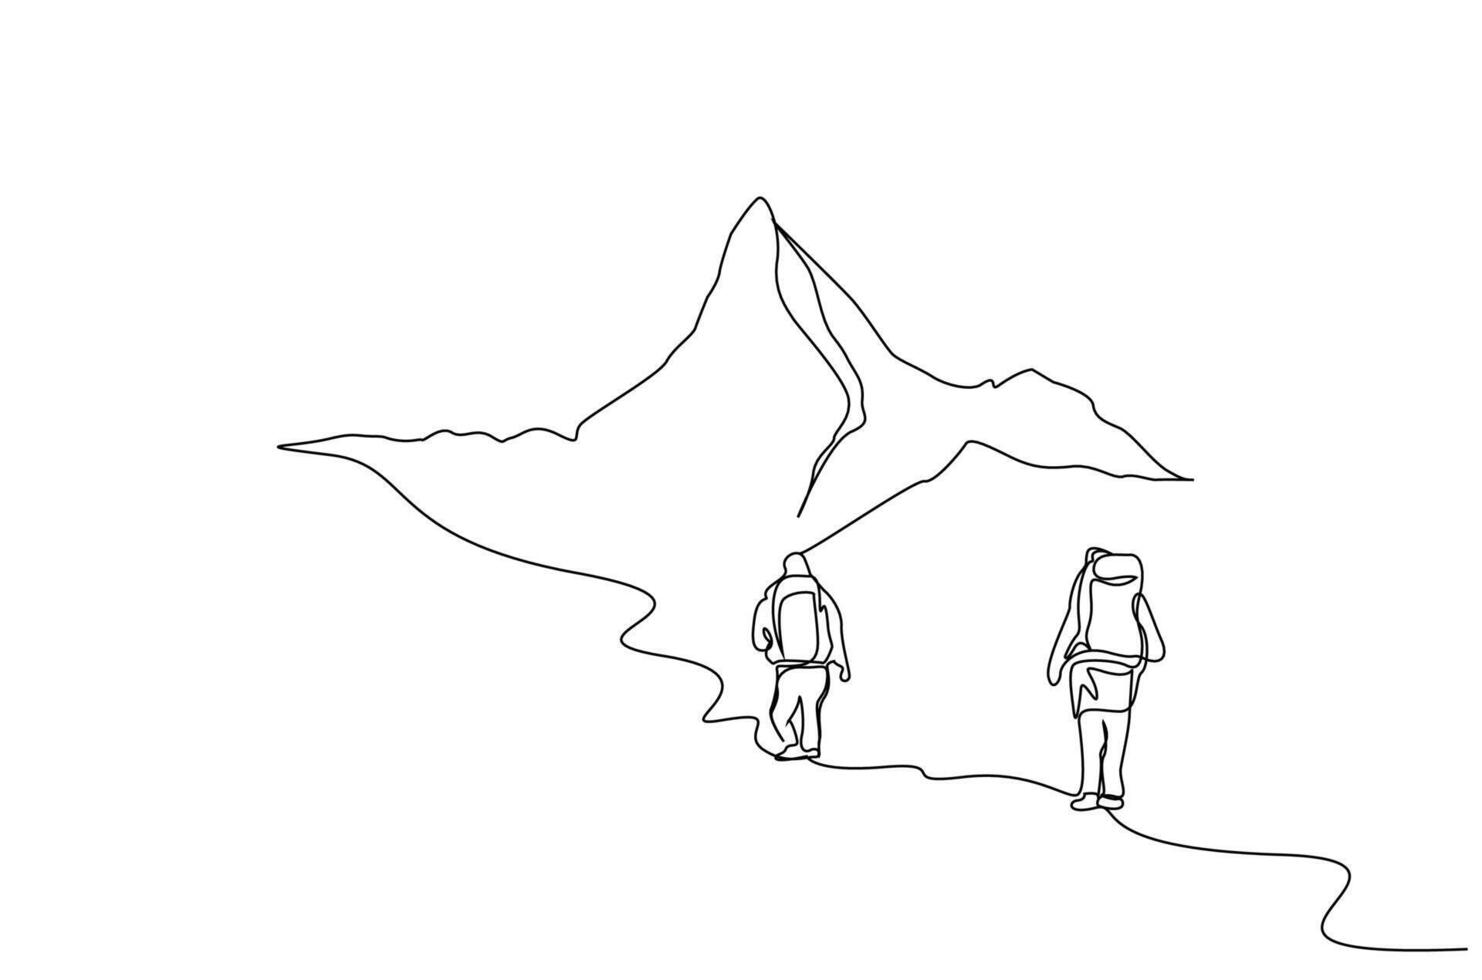 two people nature backpack walking hike trekking far away back rear behind lifestyle line art design vector